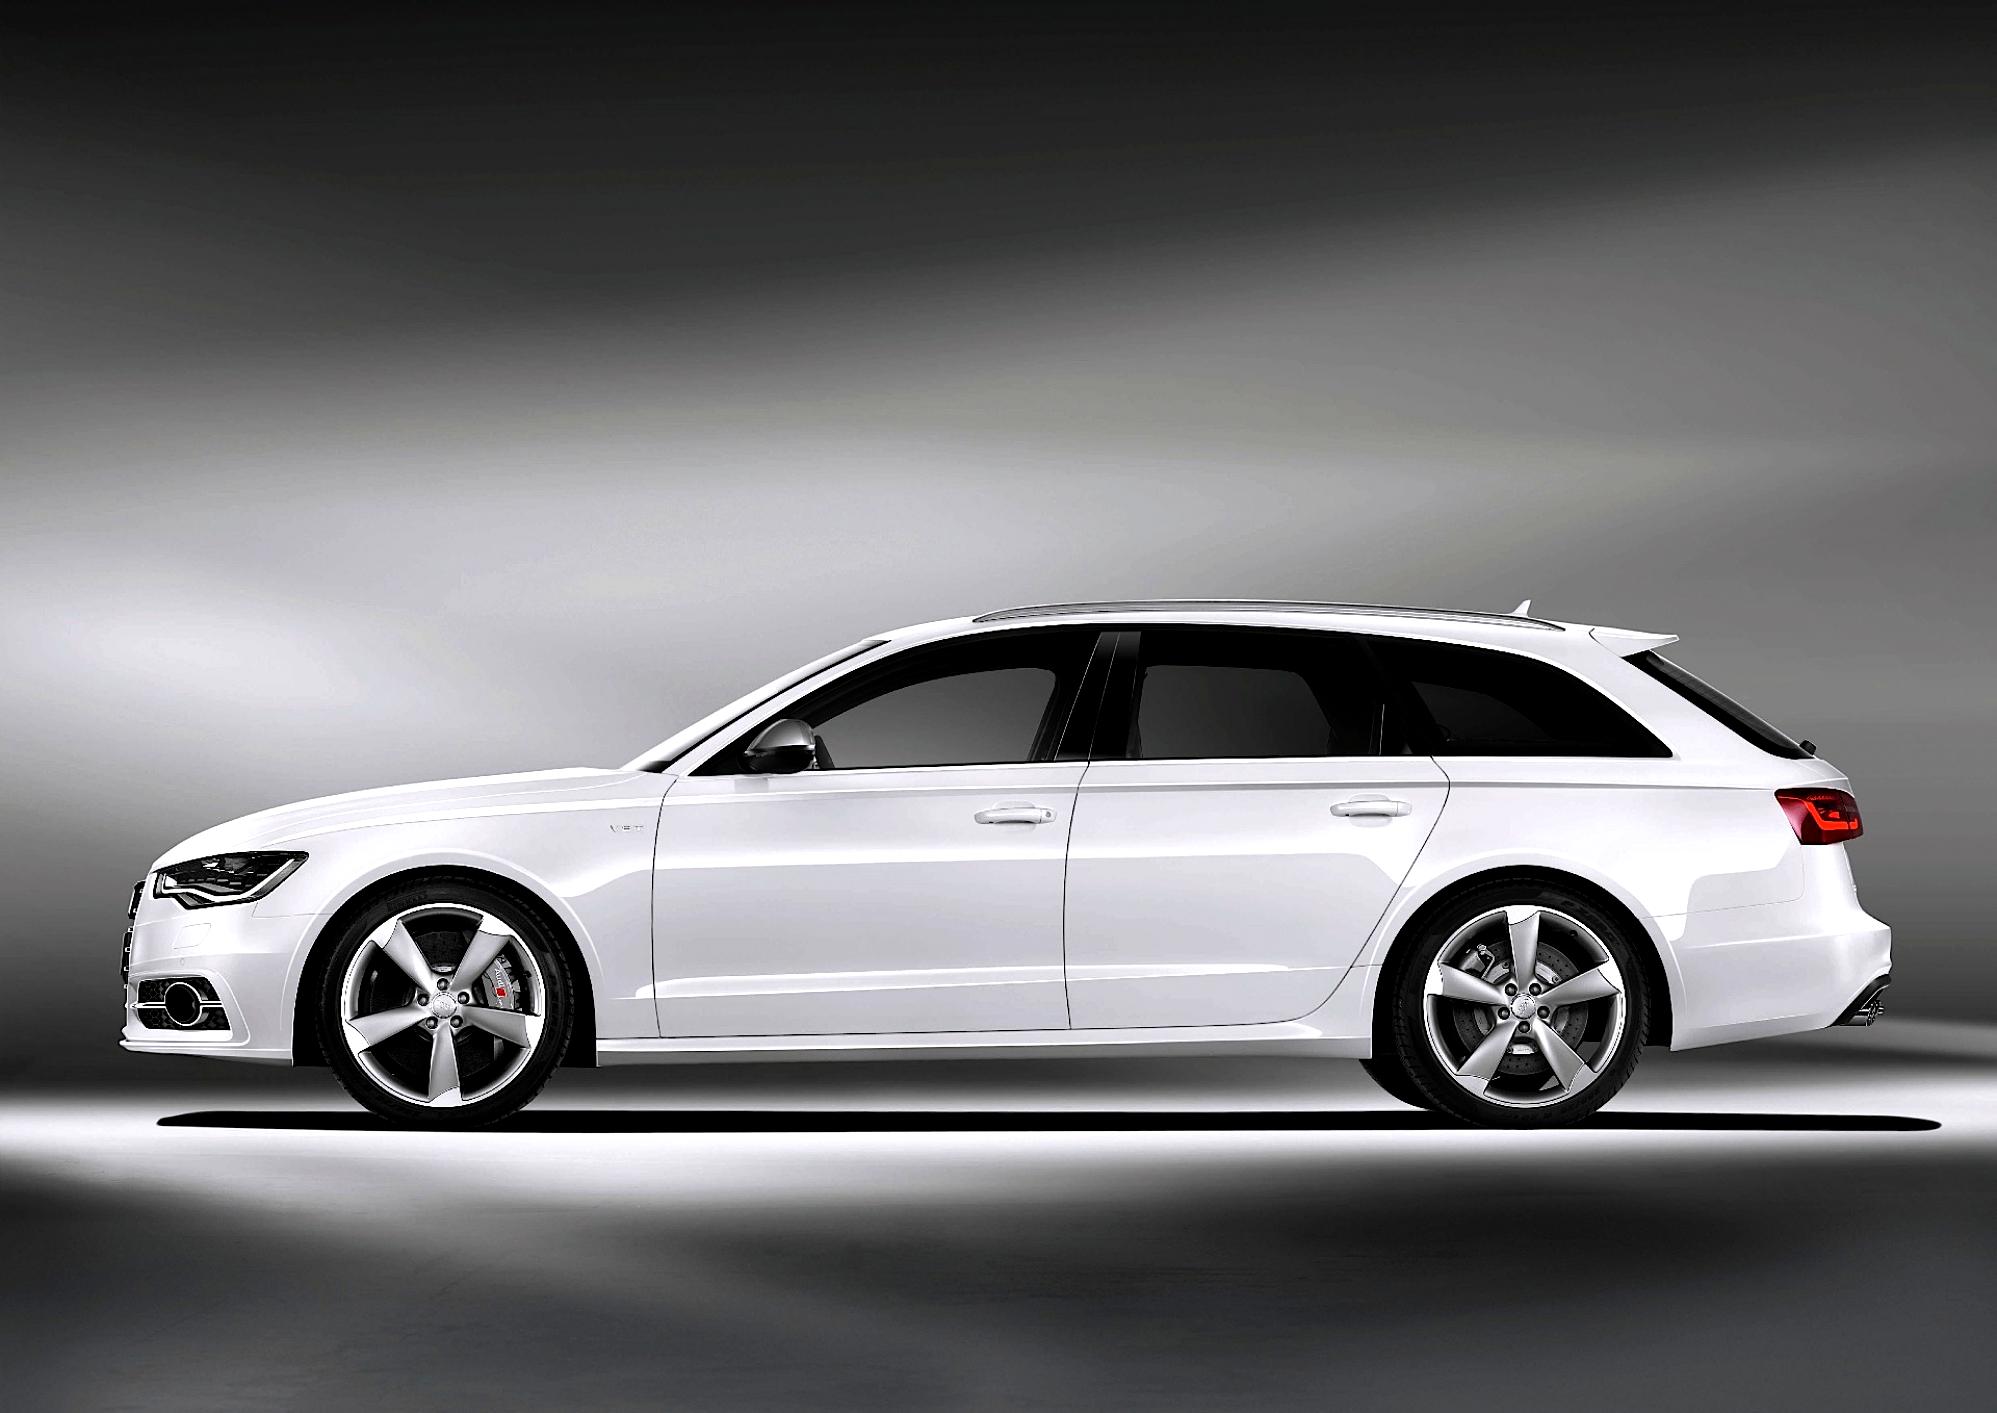 Audi S6 Avant 2012 #31